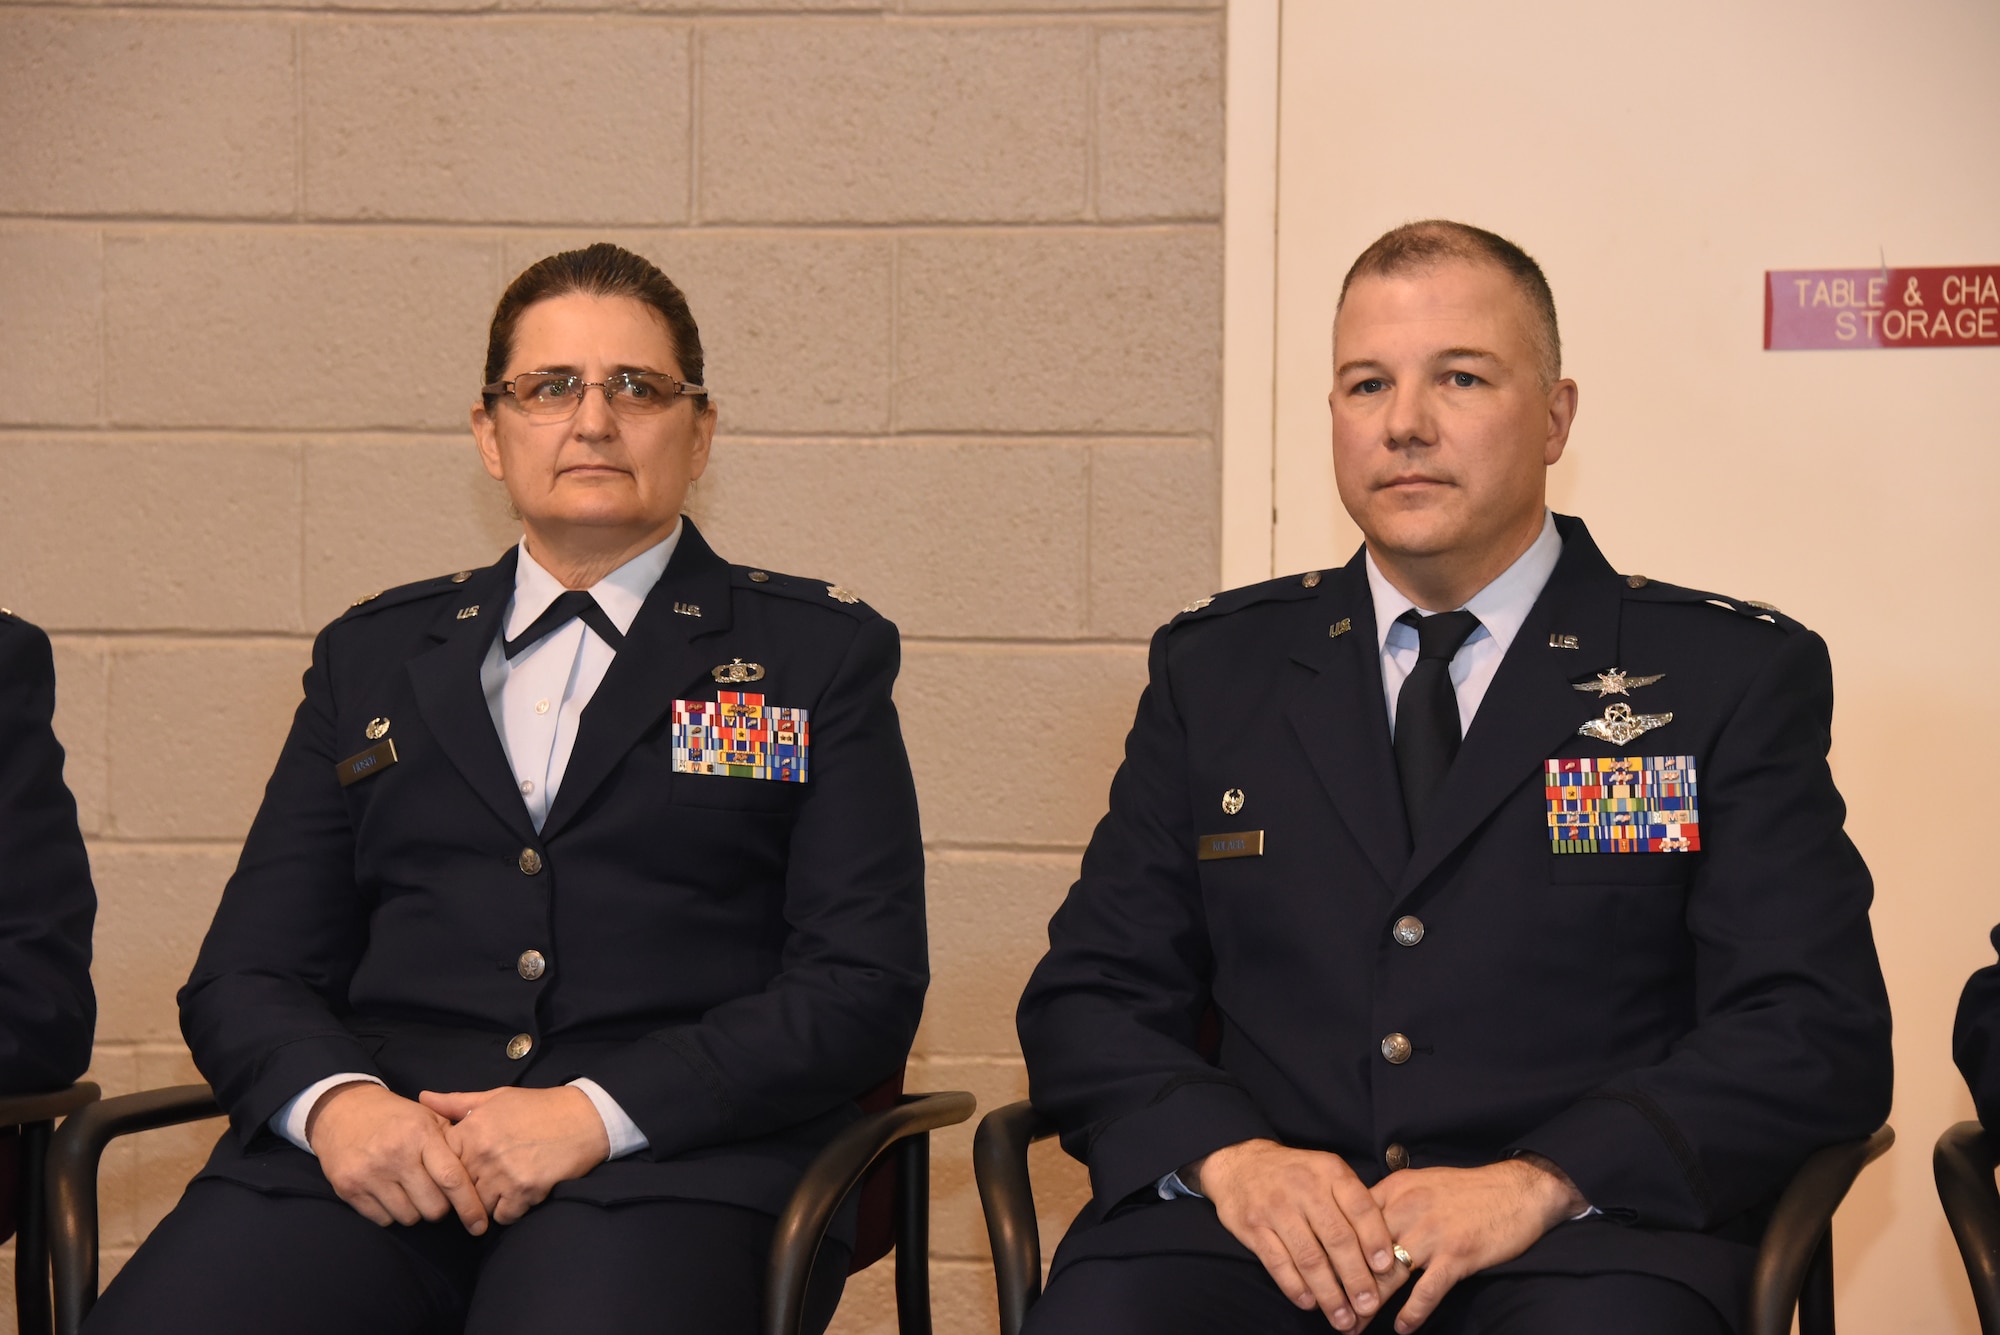 Lt. Col. Robin Hosch and Lt. Col. Jason Kolacia sit